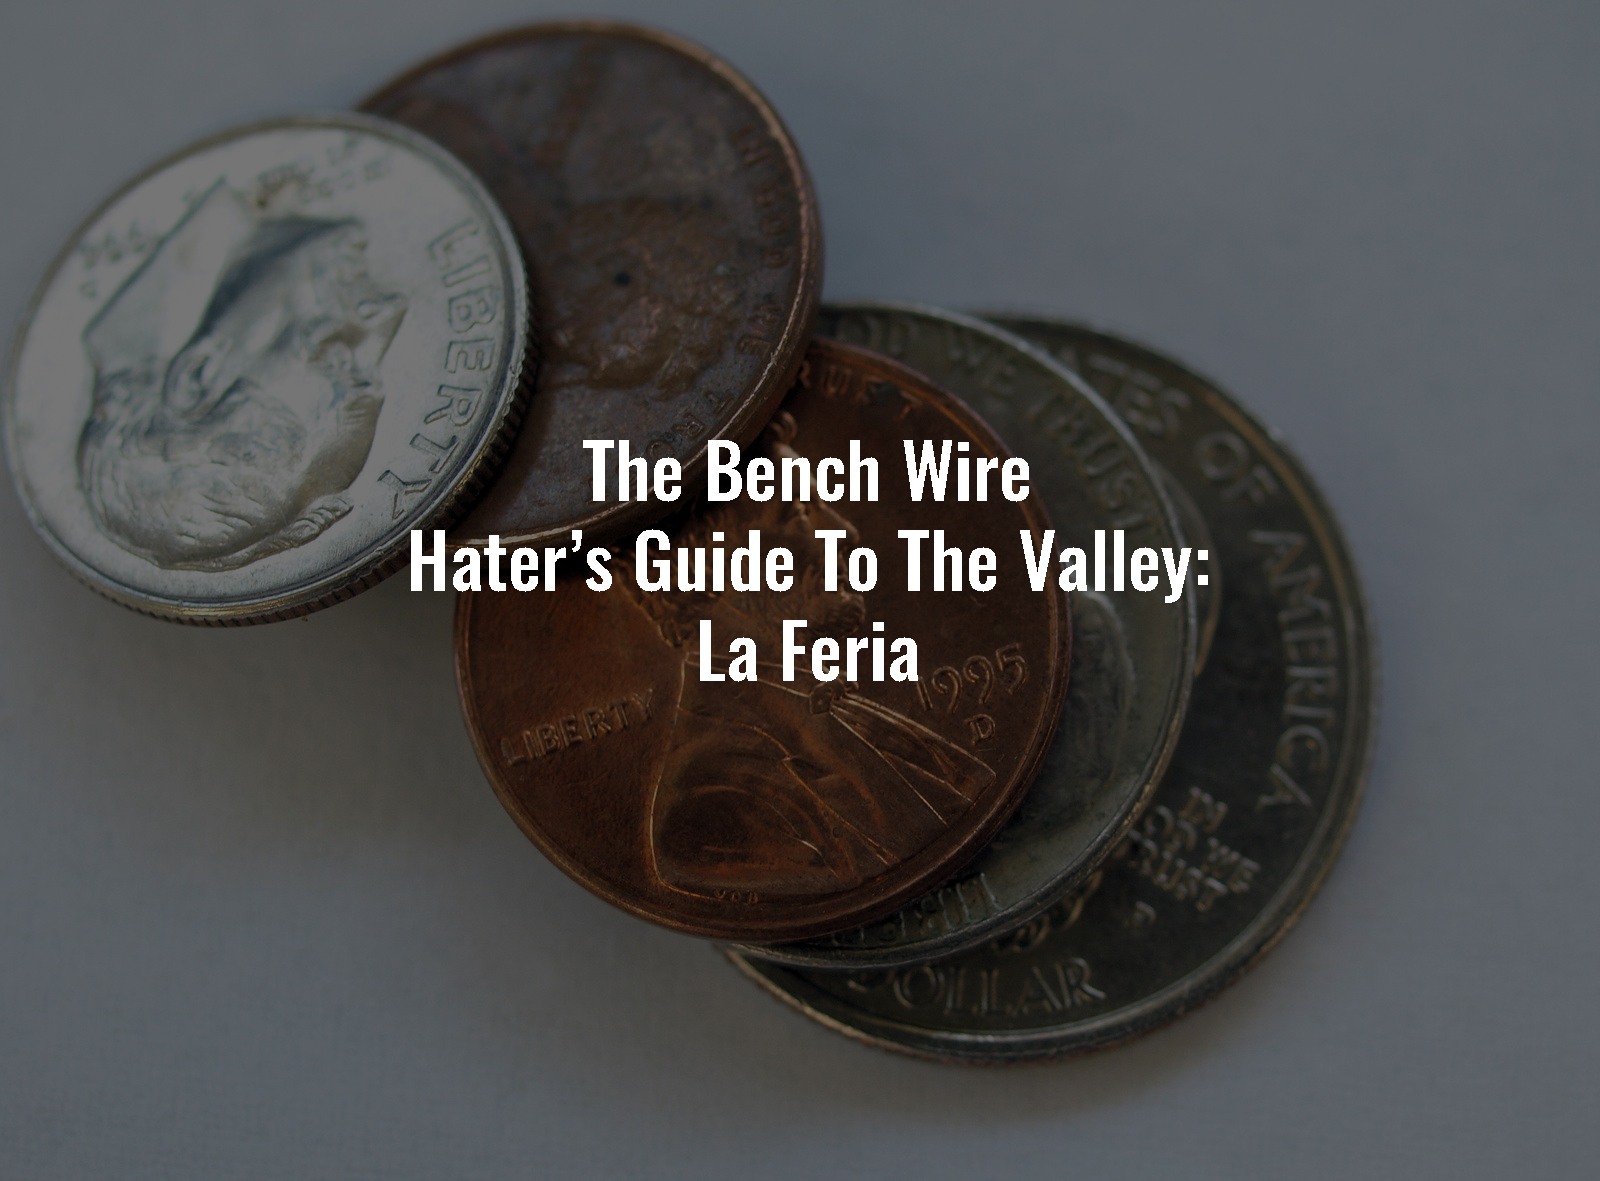 TBW Hater's Guide To The Valley La Feria